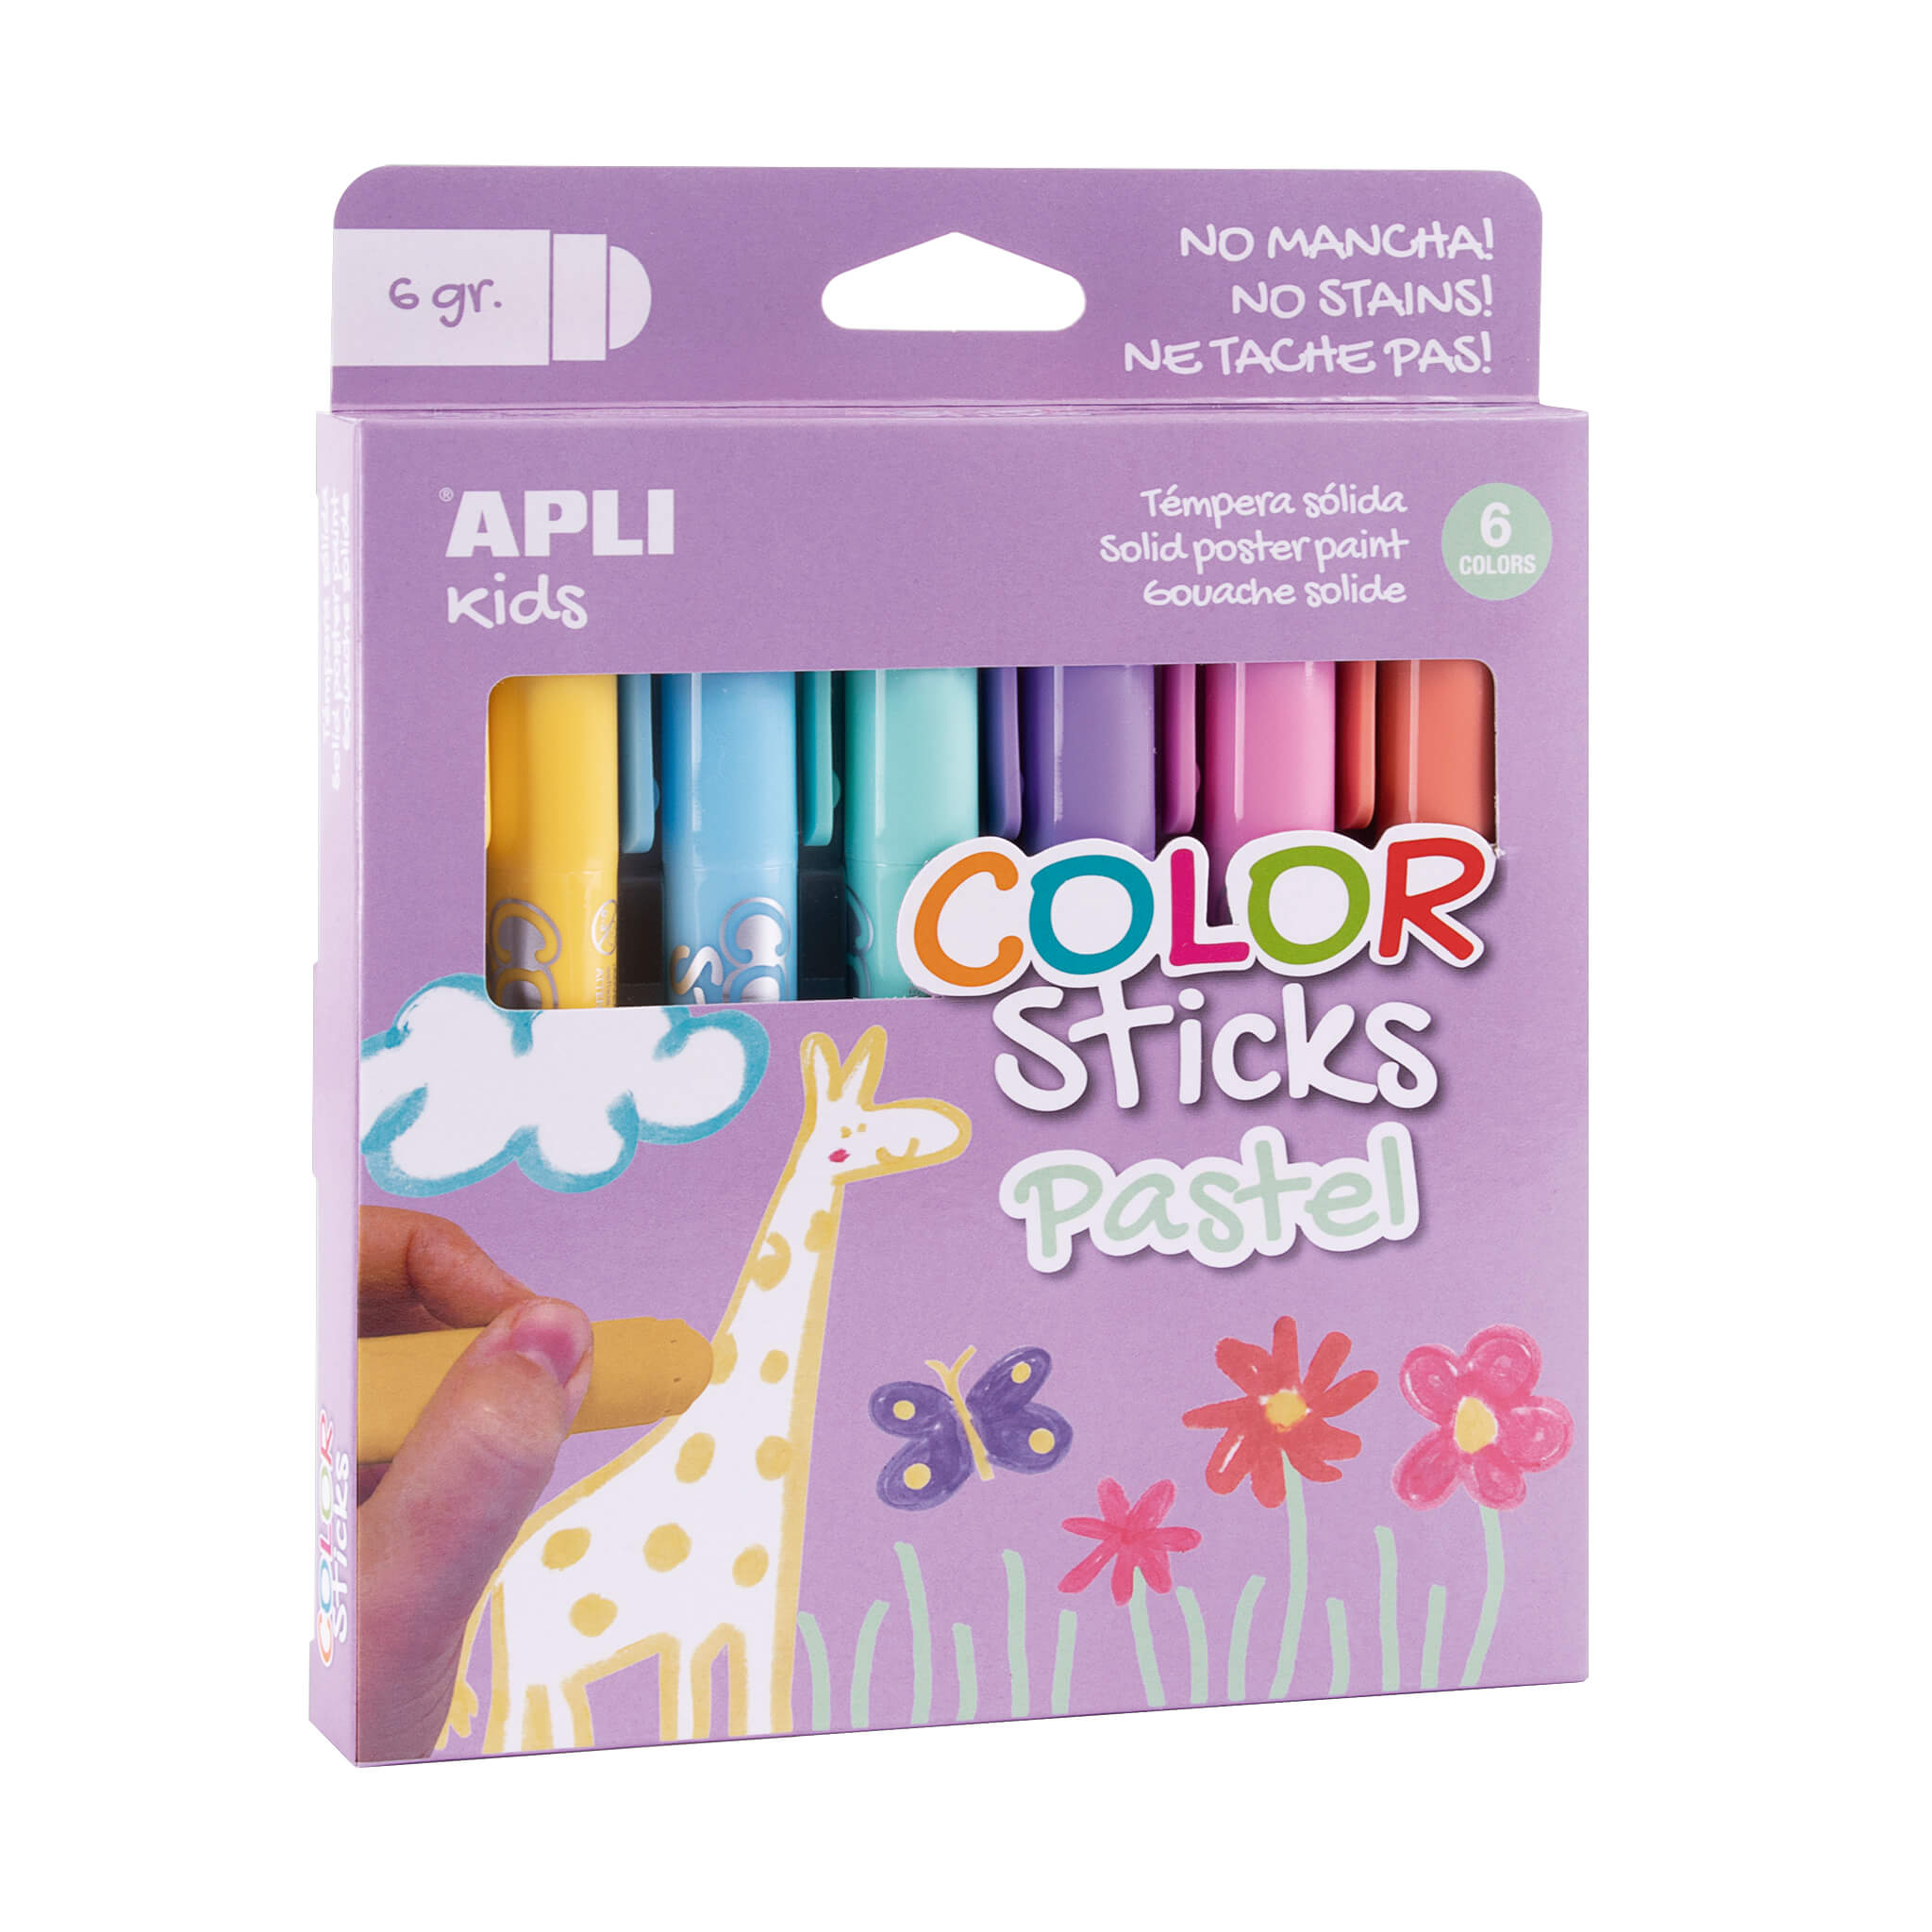 Apli kids 14227 Colouring Sticks 10g Assorted Pack of 6